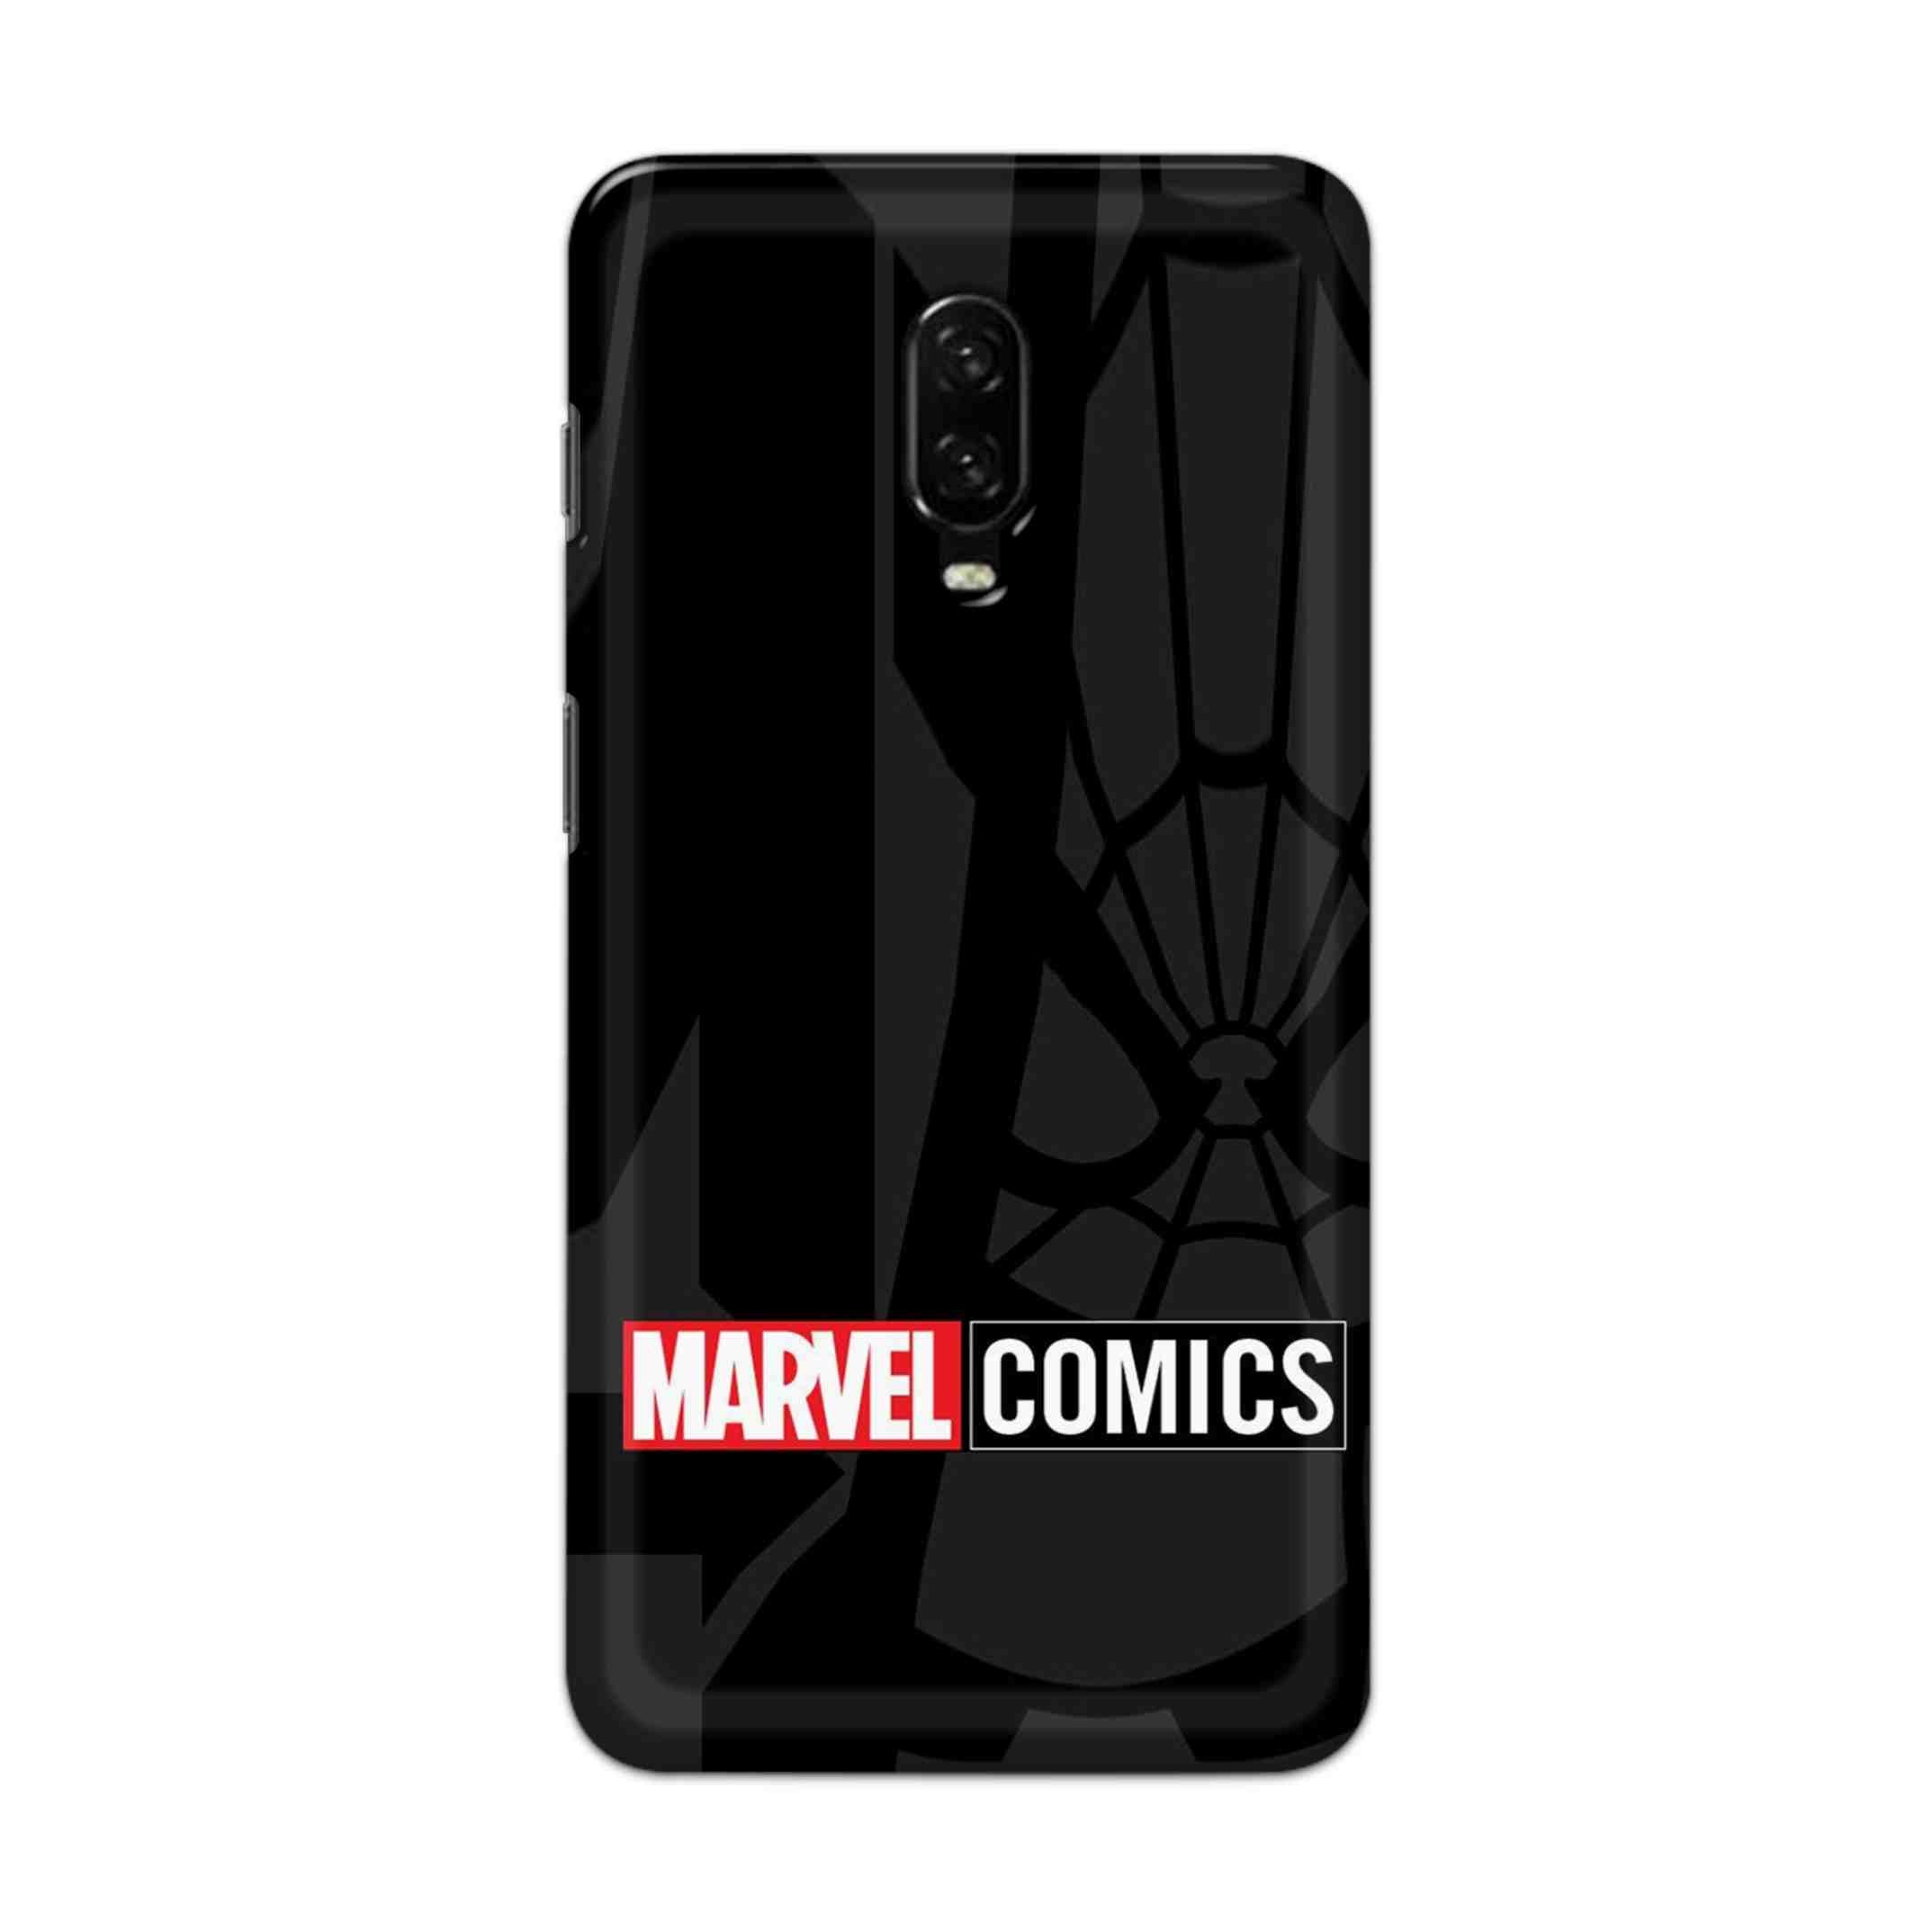 Buy Marvel Comics Hard Back Mobile Phone Case Cover For OnePlus 6T Online